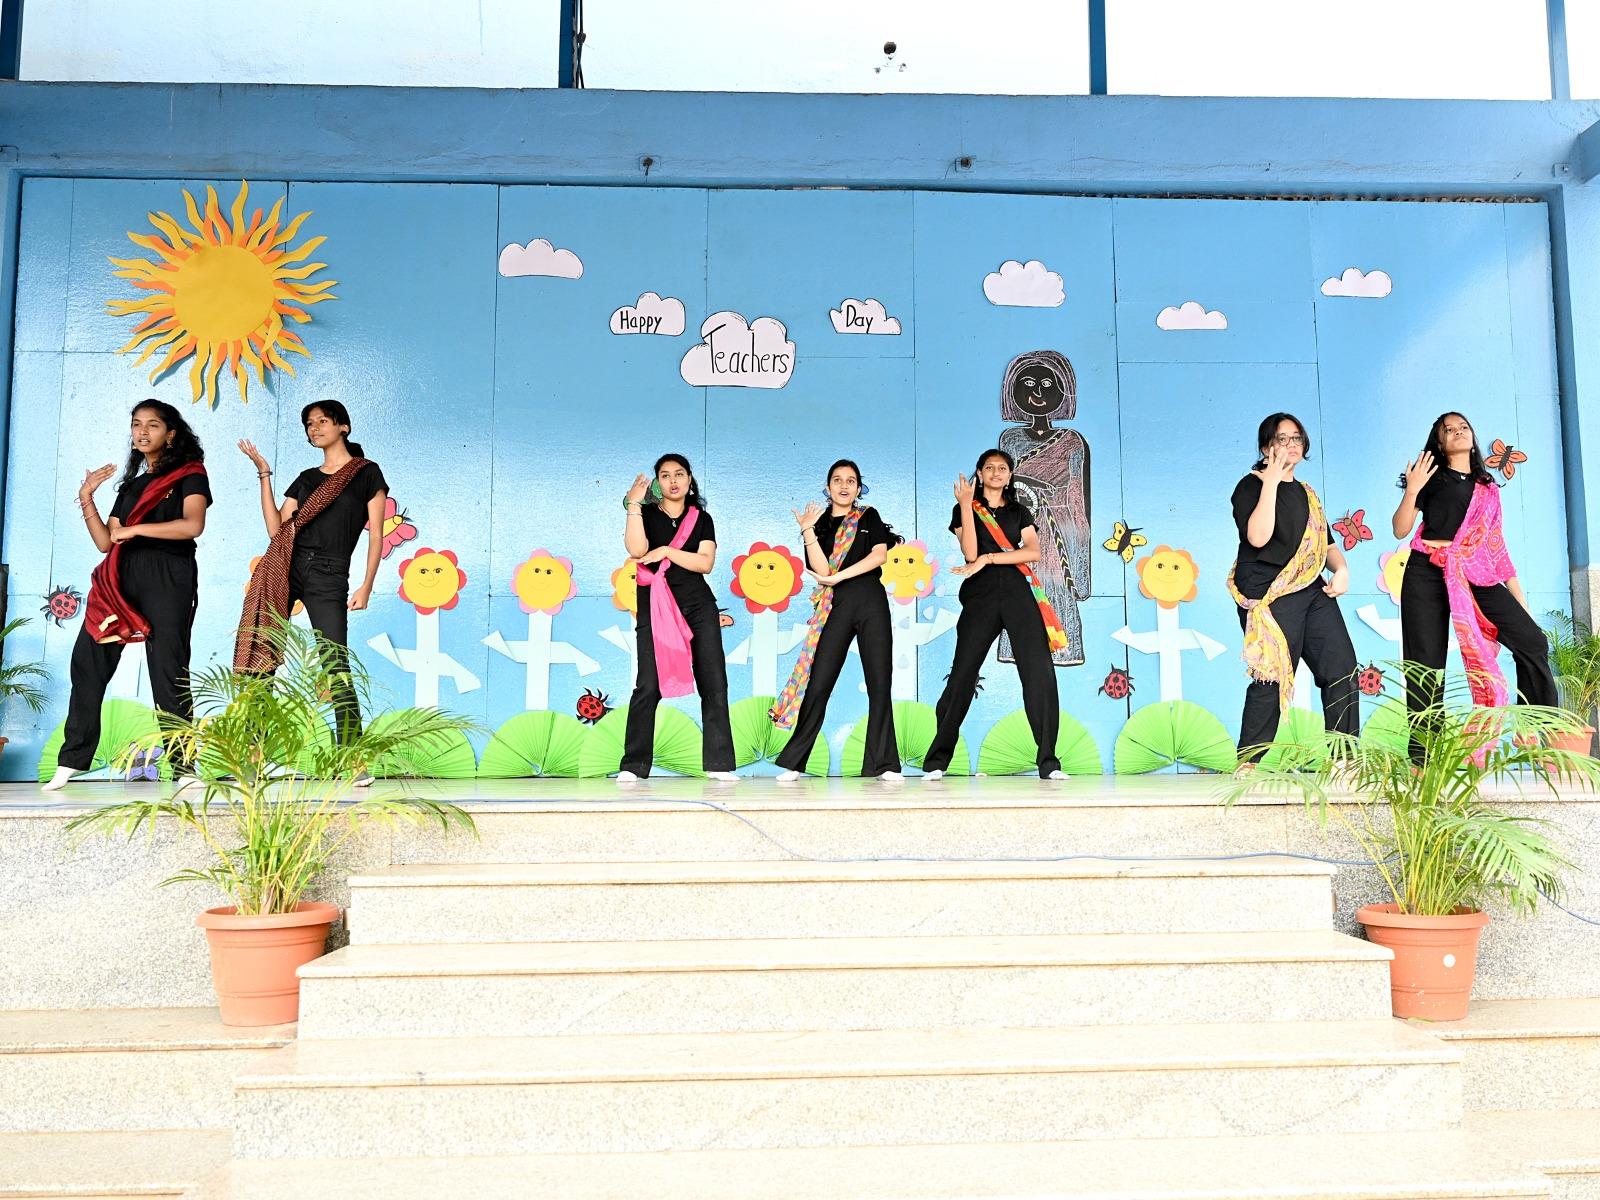 The Frank Anthony Public School, Bengaluru